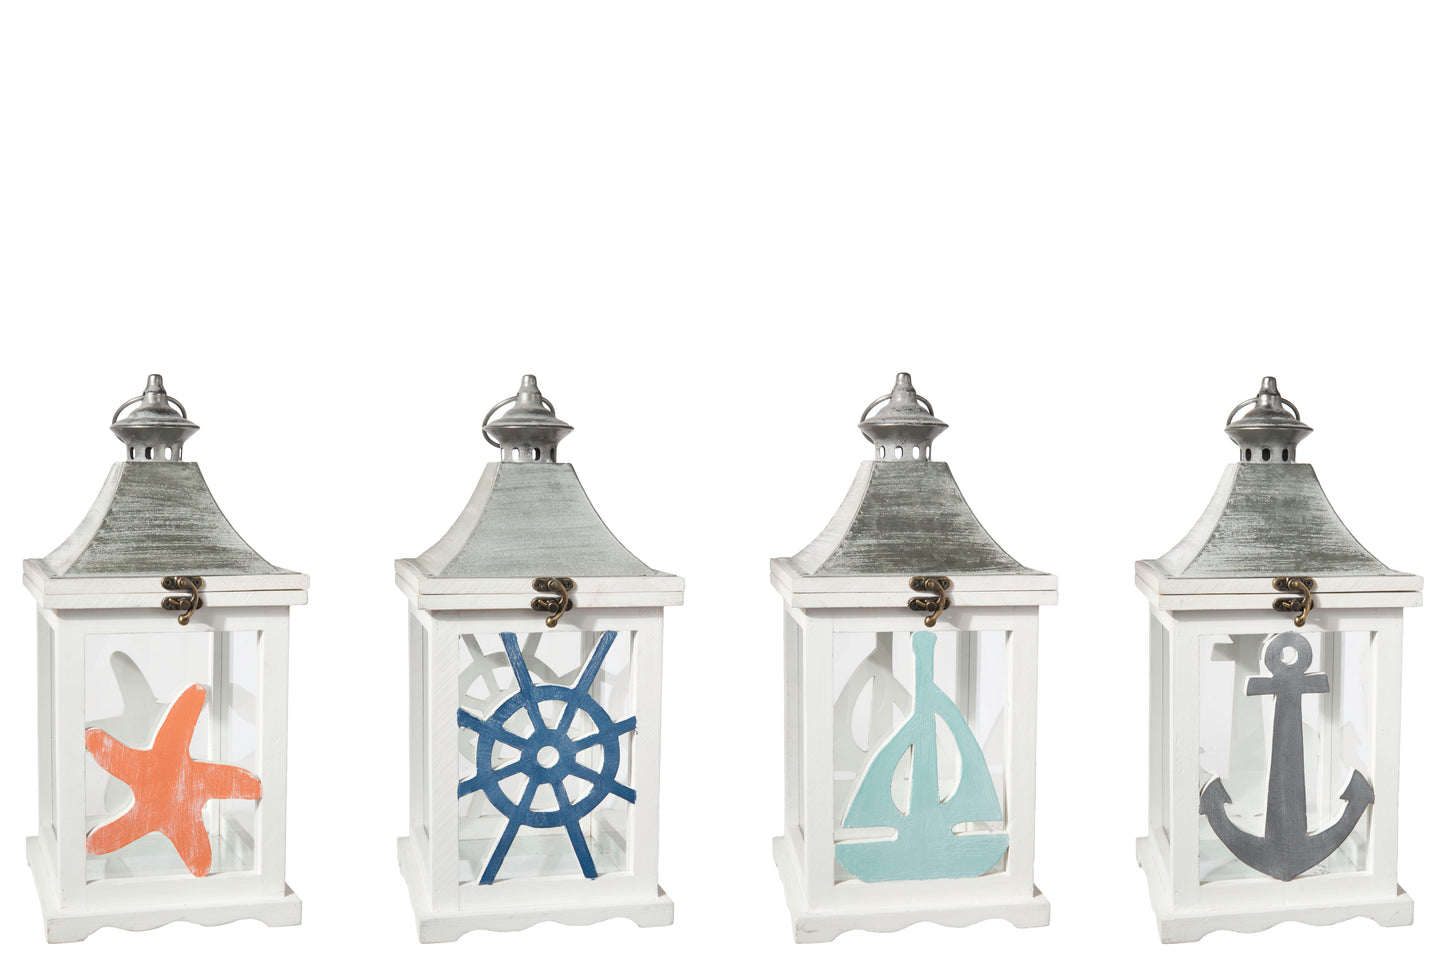 Wood Square Lantern With Silver Metal FlipTop, Hanger and Coastal Theme Design